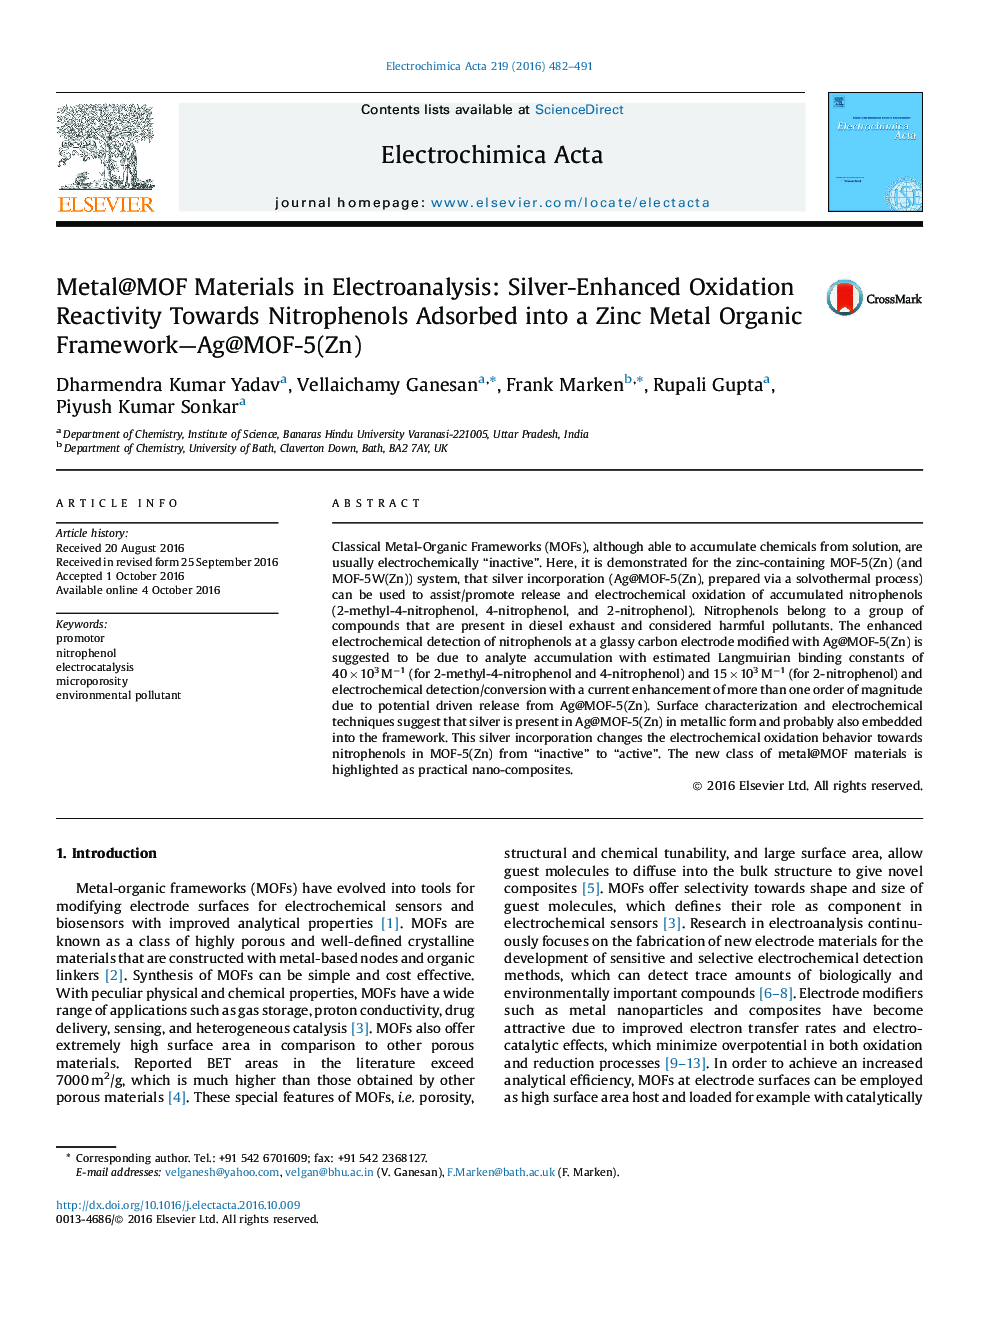 Metal@MOF Materials in Electroanalysis: Silver-Enhanced Oxidation Reactivity Towards Nitrophenols Adsorbed into a Zinc Metal Organic Framework-Ag@MOF-5(Zn)